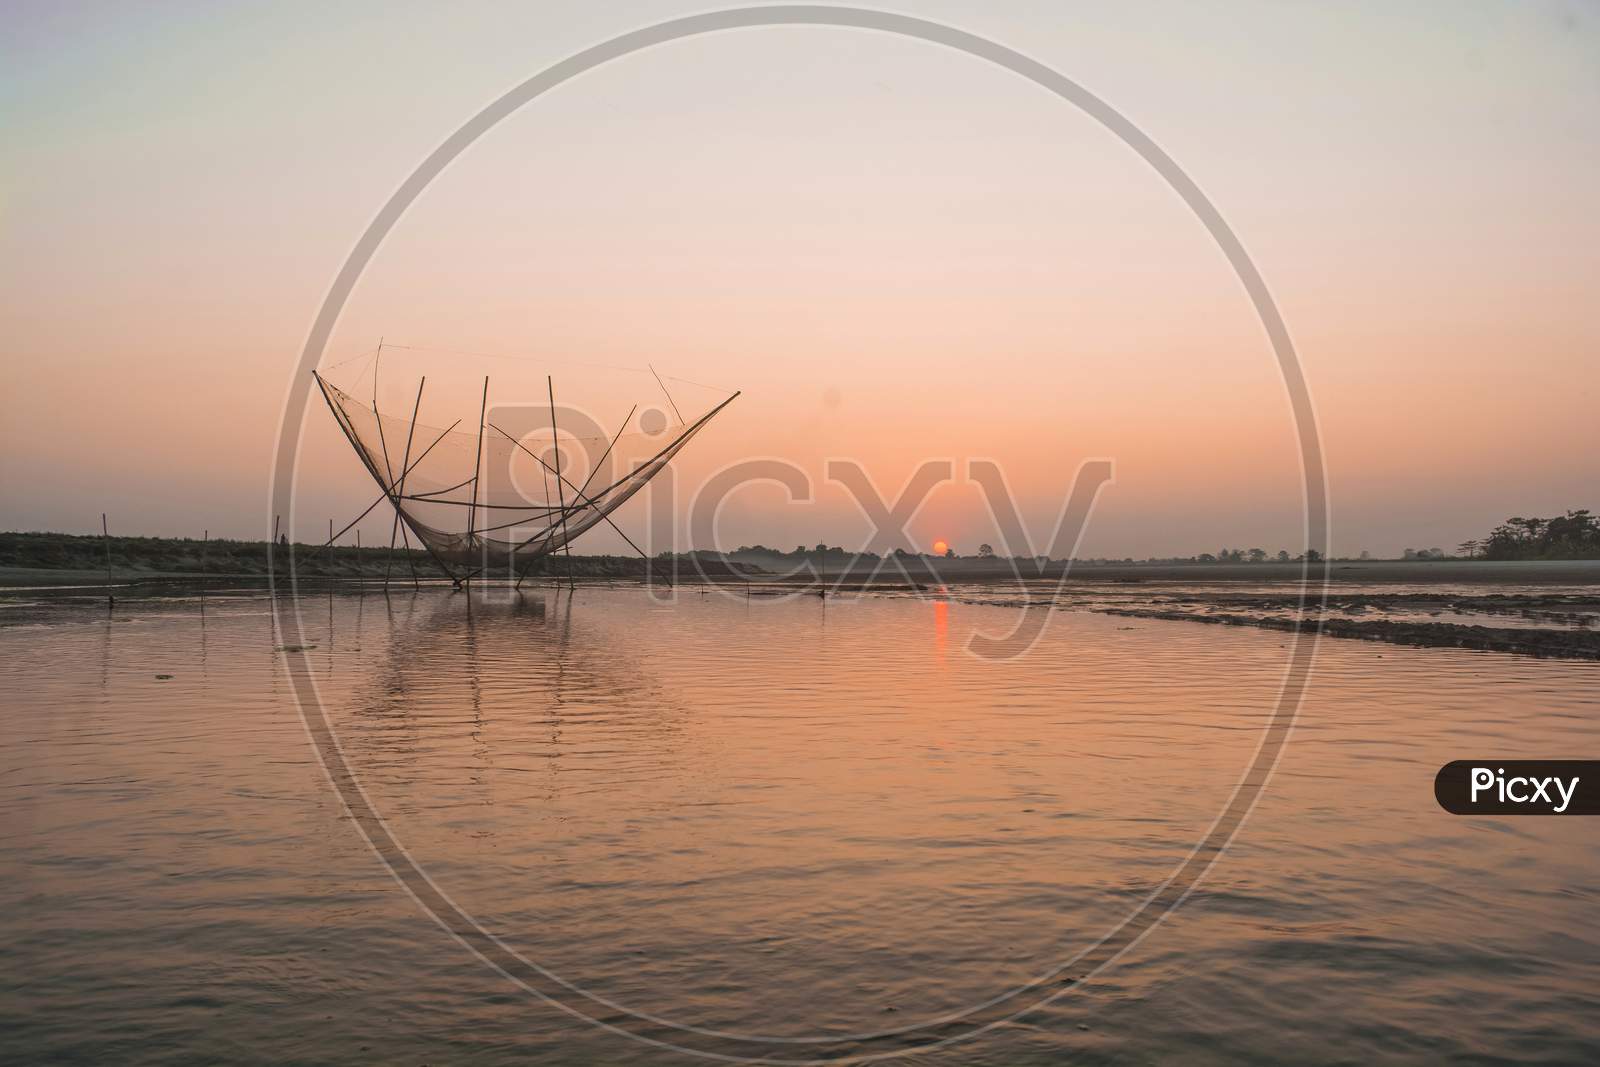 Fishing net during Sunset at the river Brahmaputra in Majuli Island, Assam.